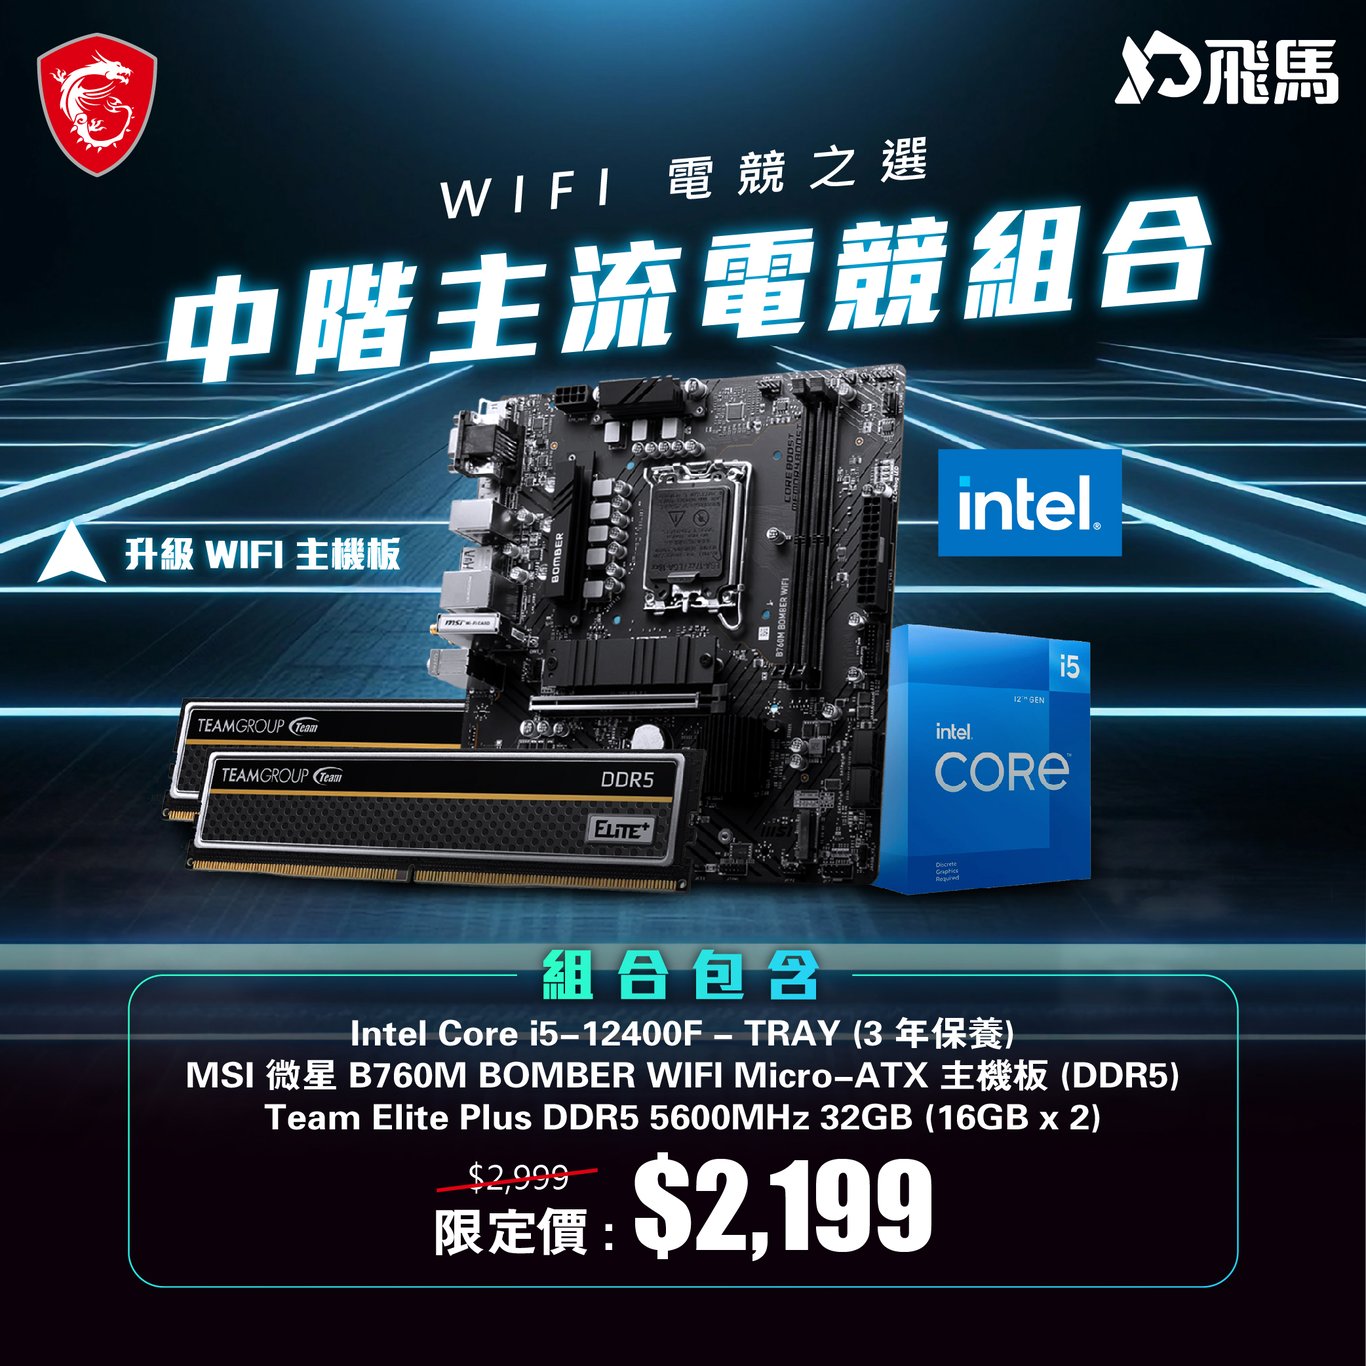 MSI 微星 B760M BOMBER WIFI Micro-ATX 主機板 (DDR5) + Intel Core i5-12400F - TRAY (3 年保養) + Team Elite Plus DDR5 5600MHz 32GB (16GB x 2)